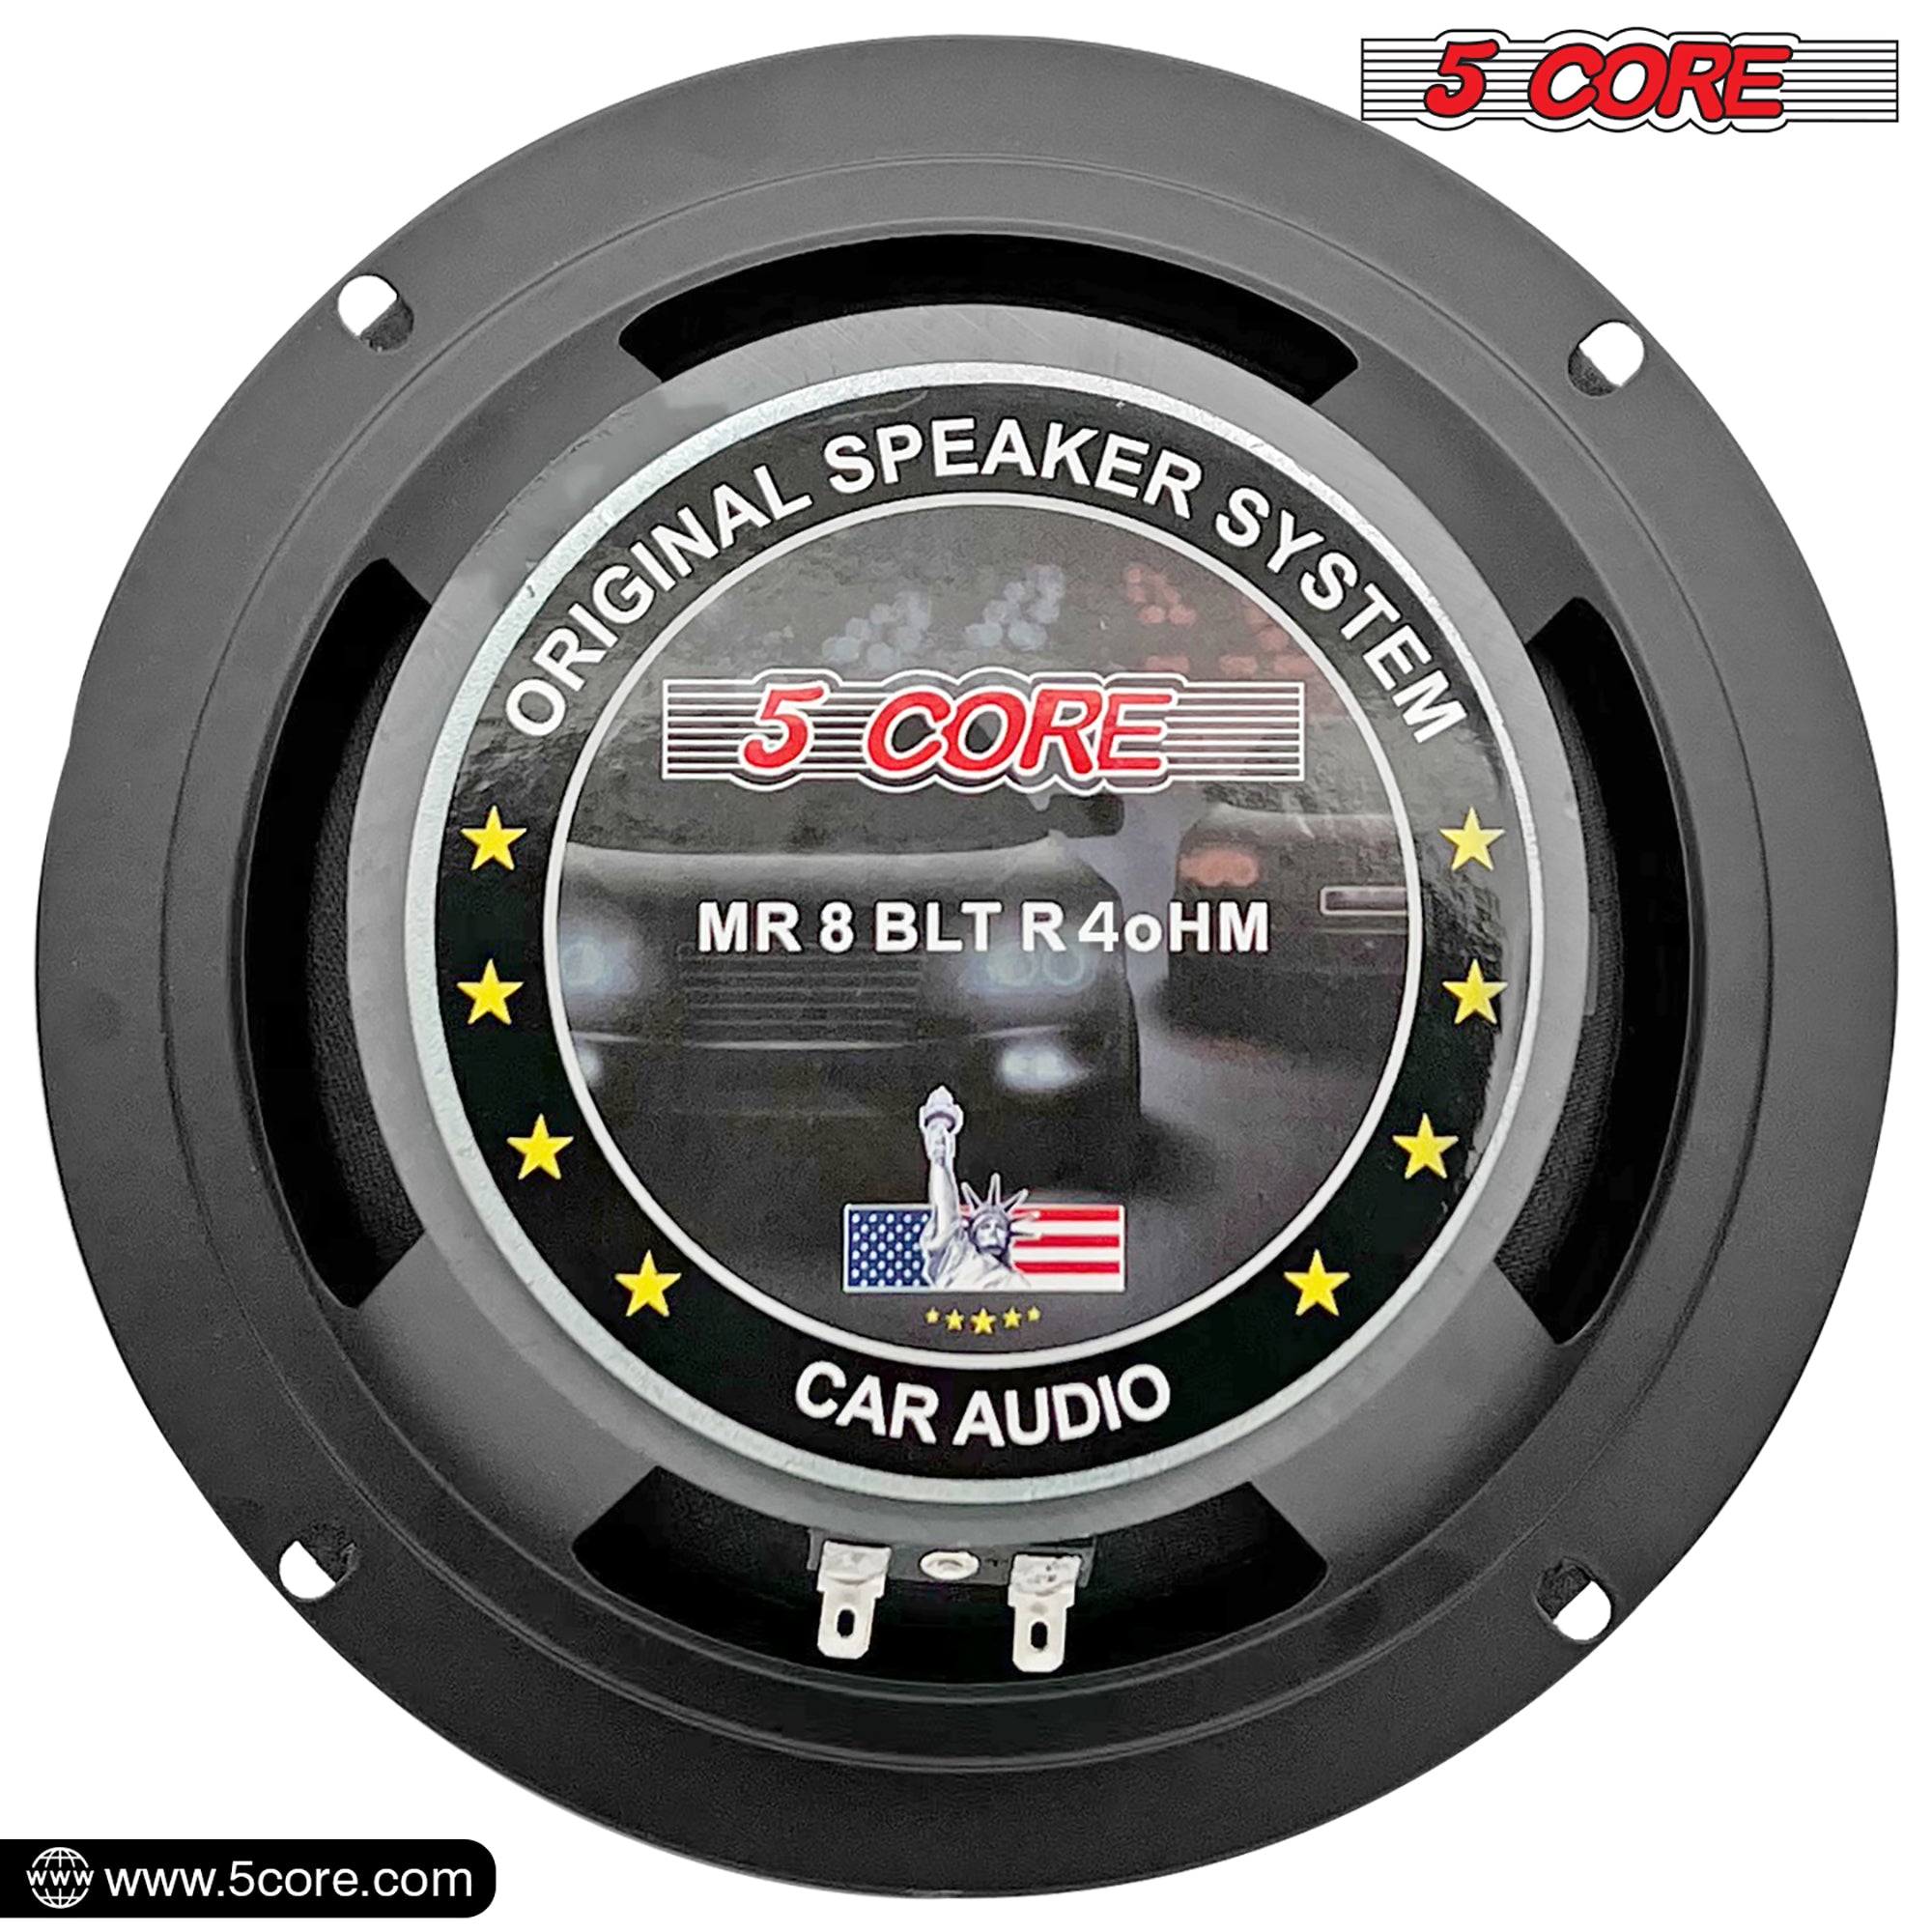 5 Core Car Speakers 8 Inch 580W PMPO 4 Ohm Midrange Speakers Built in Super Bullet Tweeters PRO Car Audio Subwoofer - MR 8 BLT R 4oHM